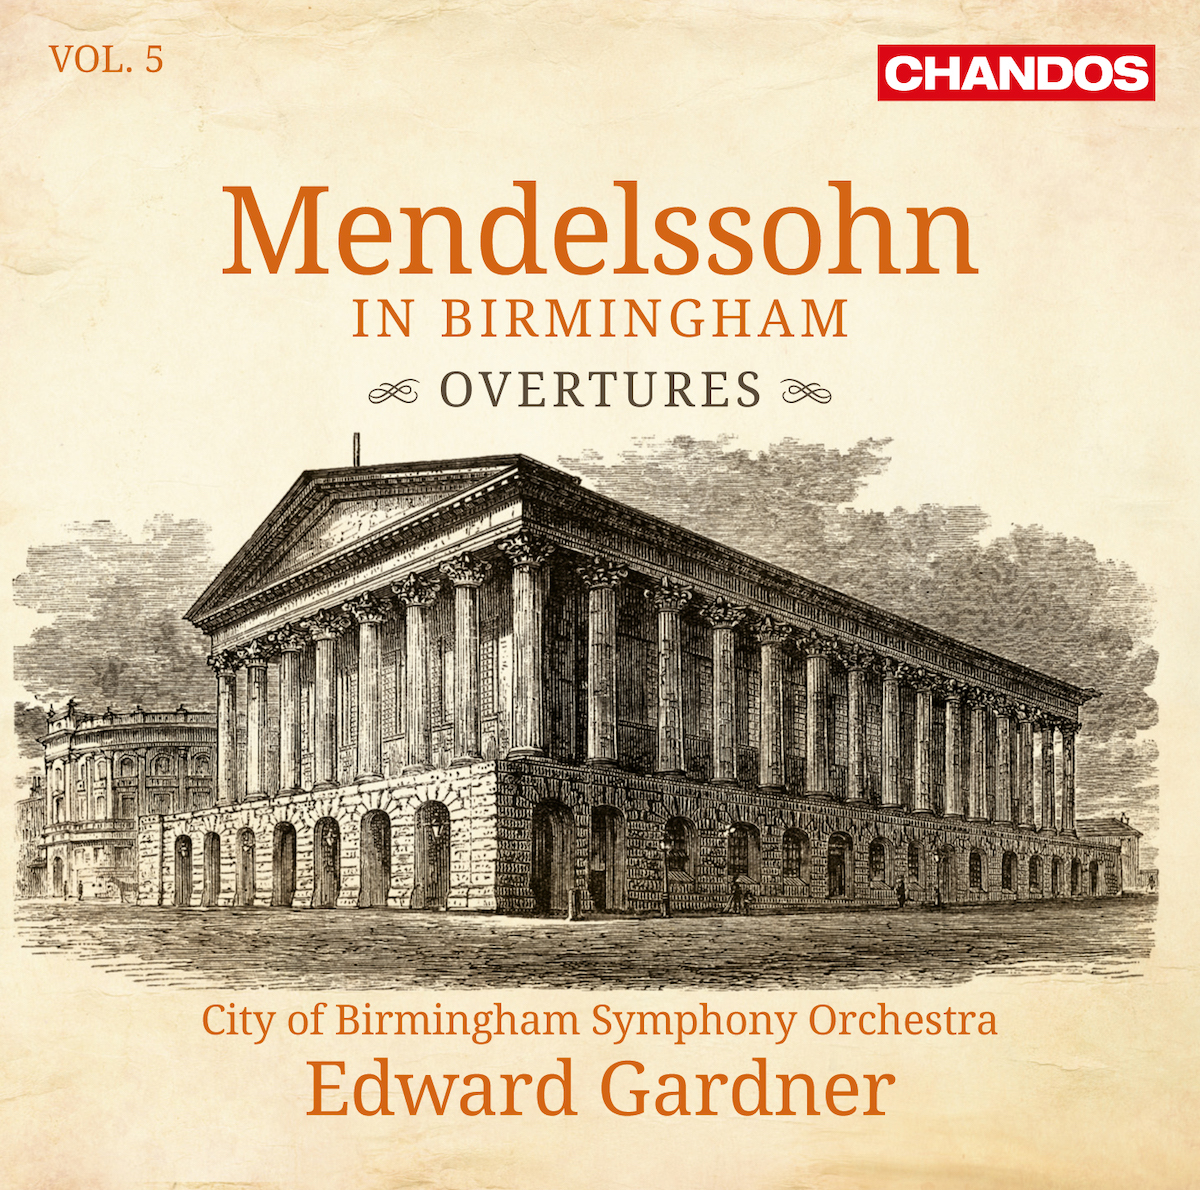 City of Birmingham Symphony Orchestra & Edward Gardner - Mendelssohn in Birmingham Vol. 5 (2019) [FLAC 24bit/96kHz]